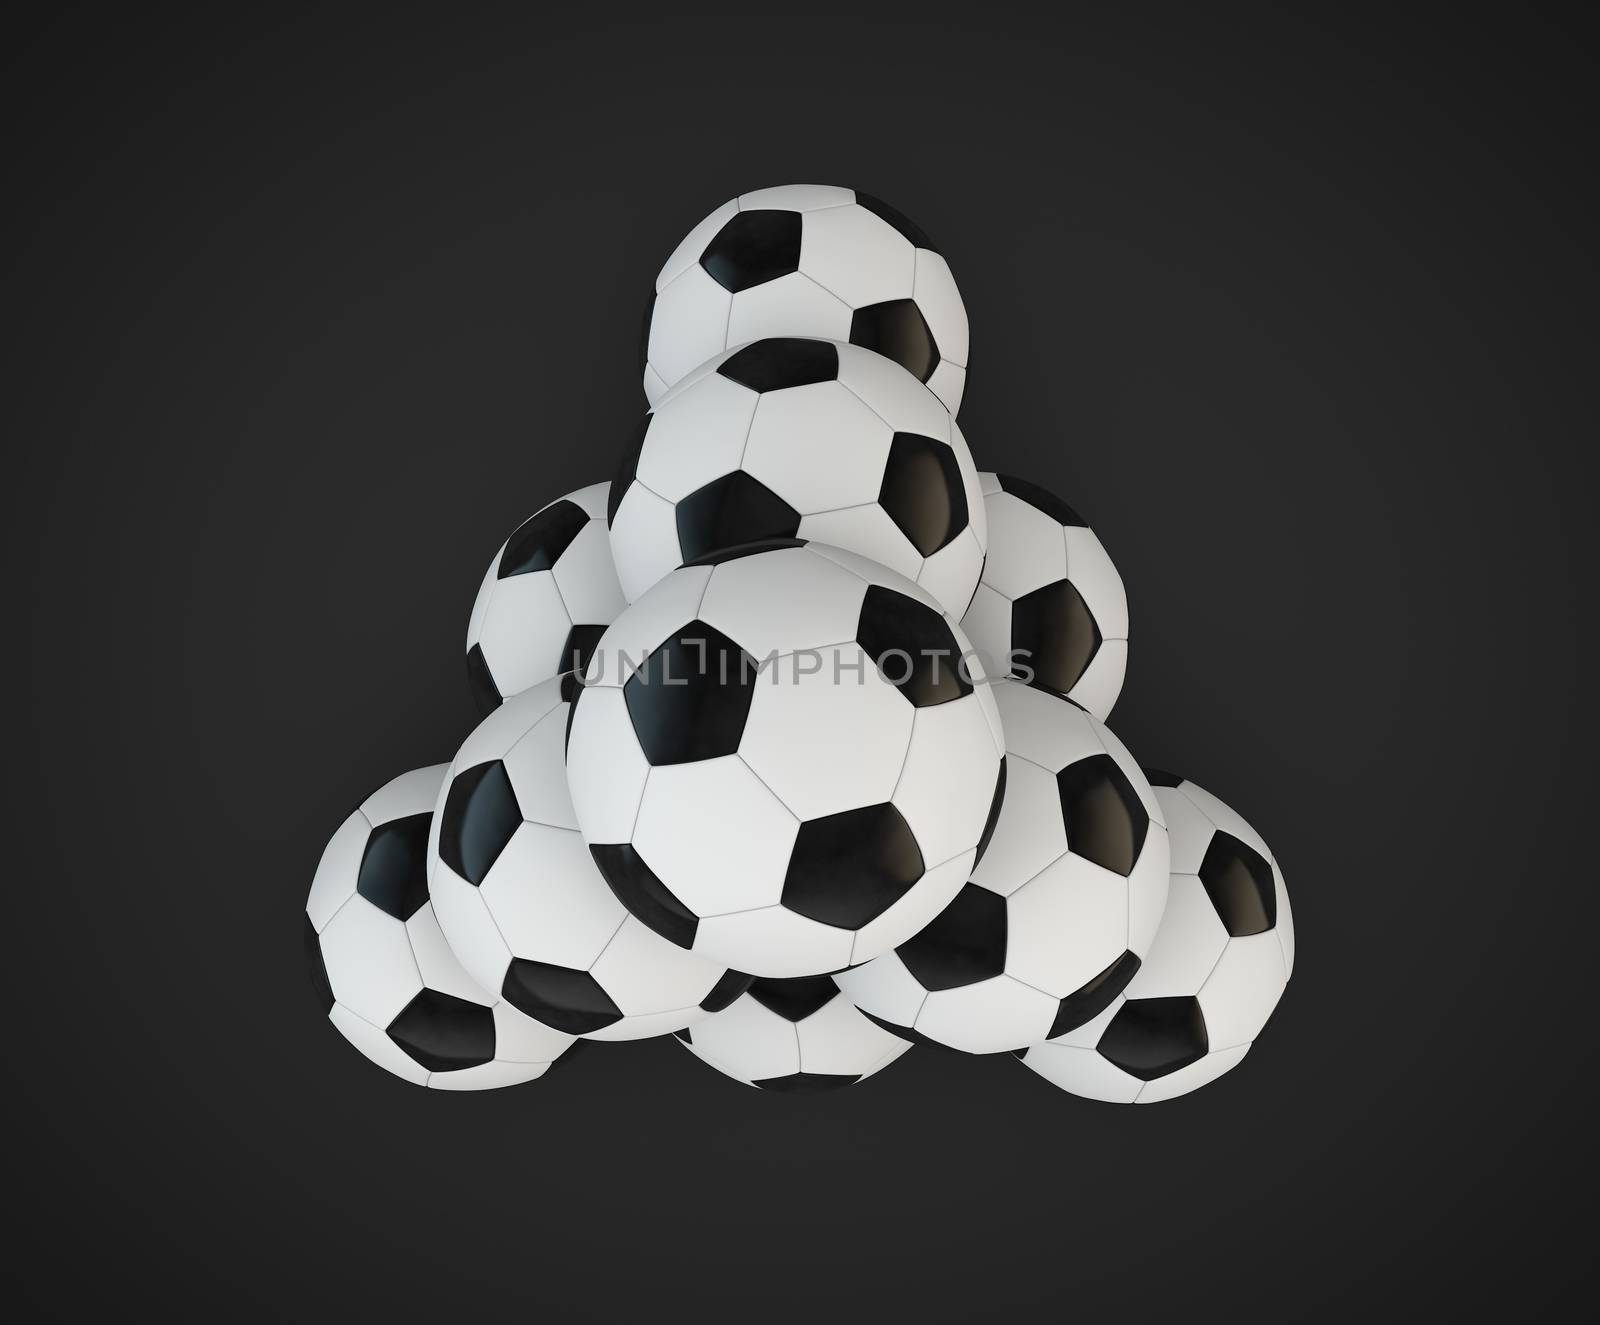 3d render of ten soccer balls faced pyramid top view